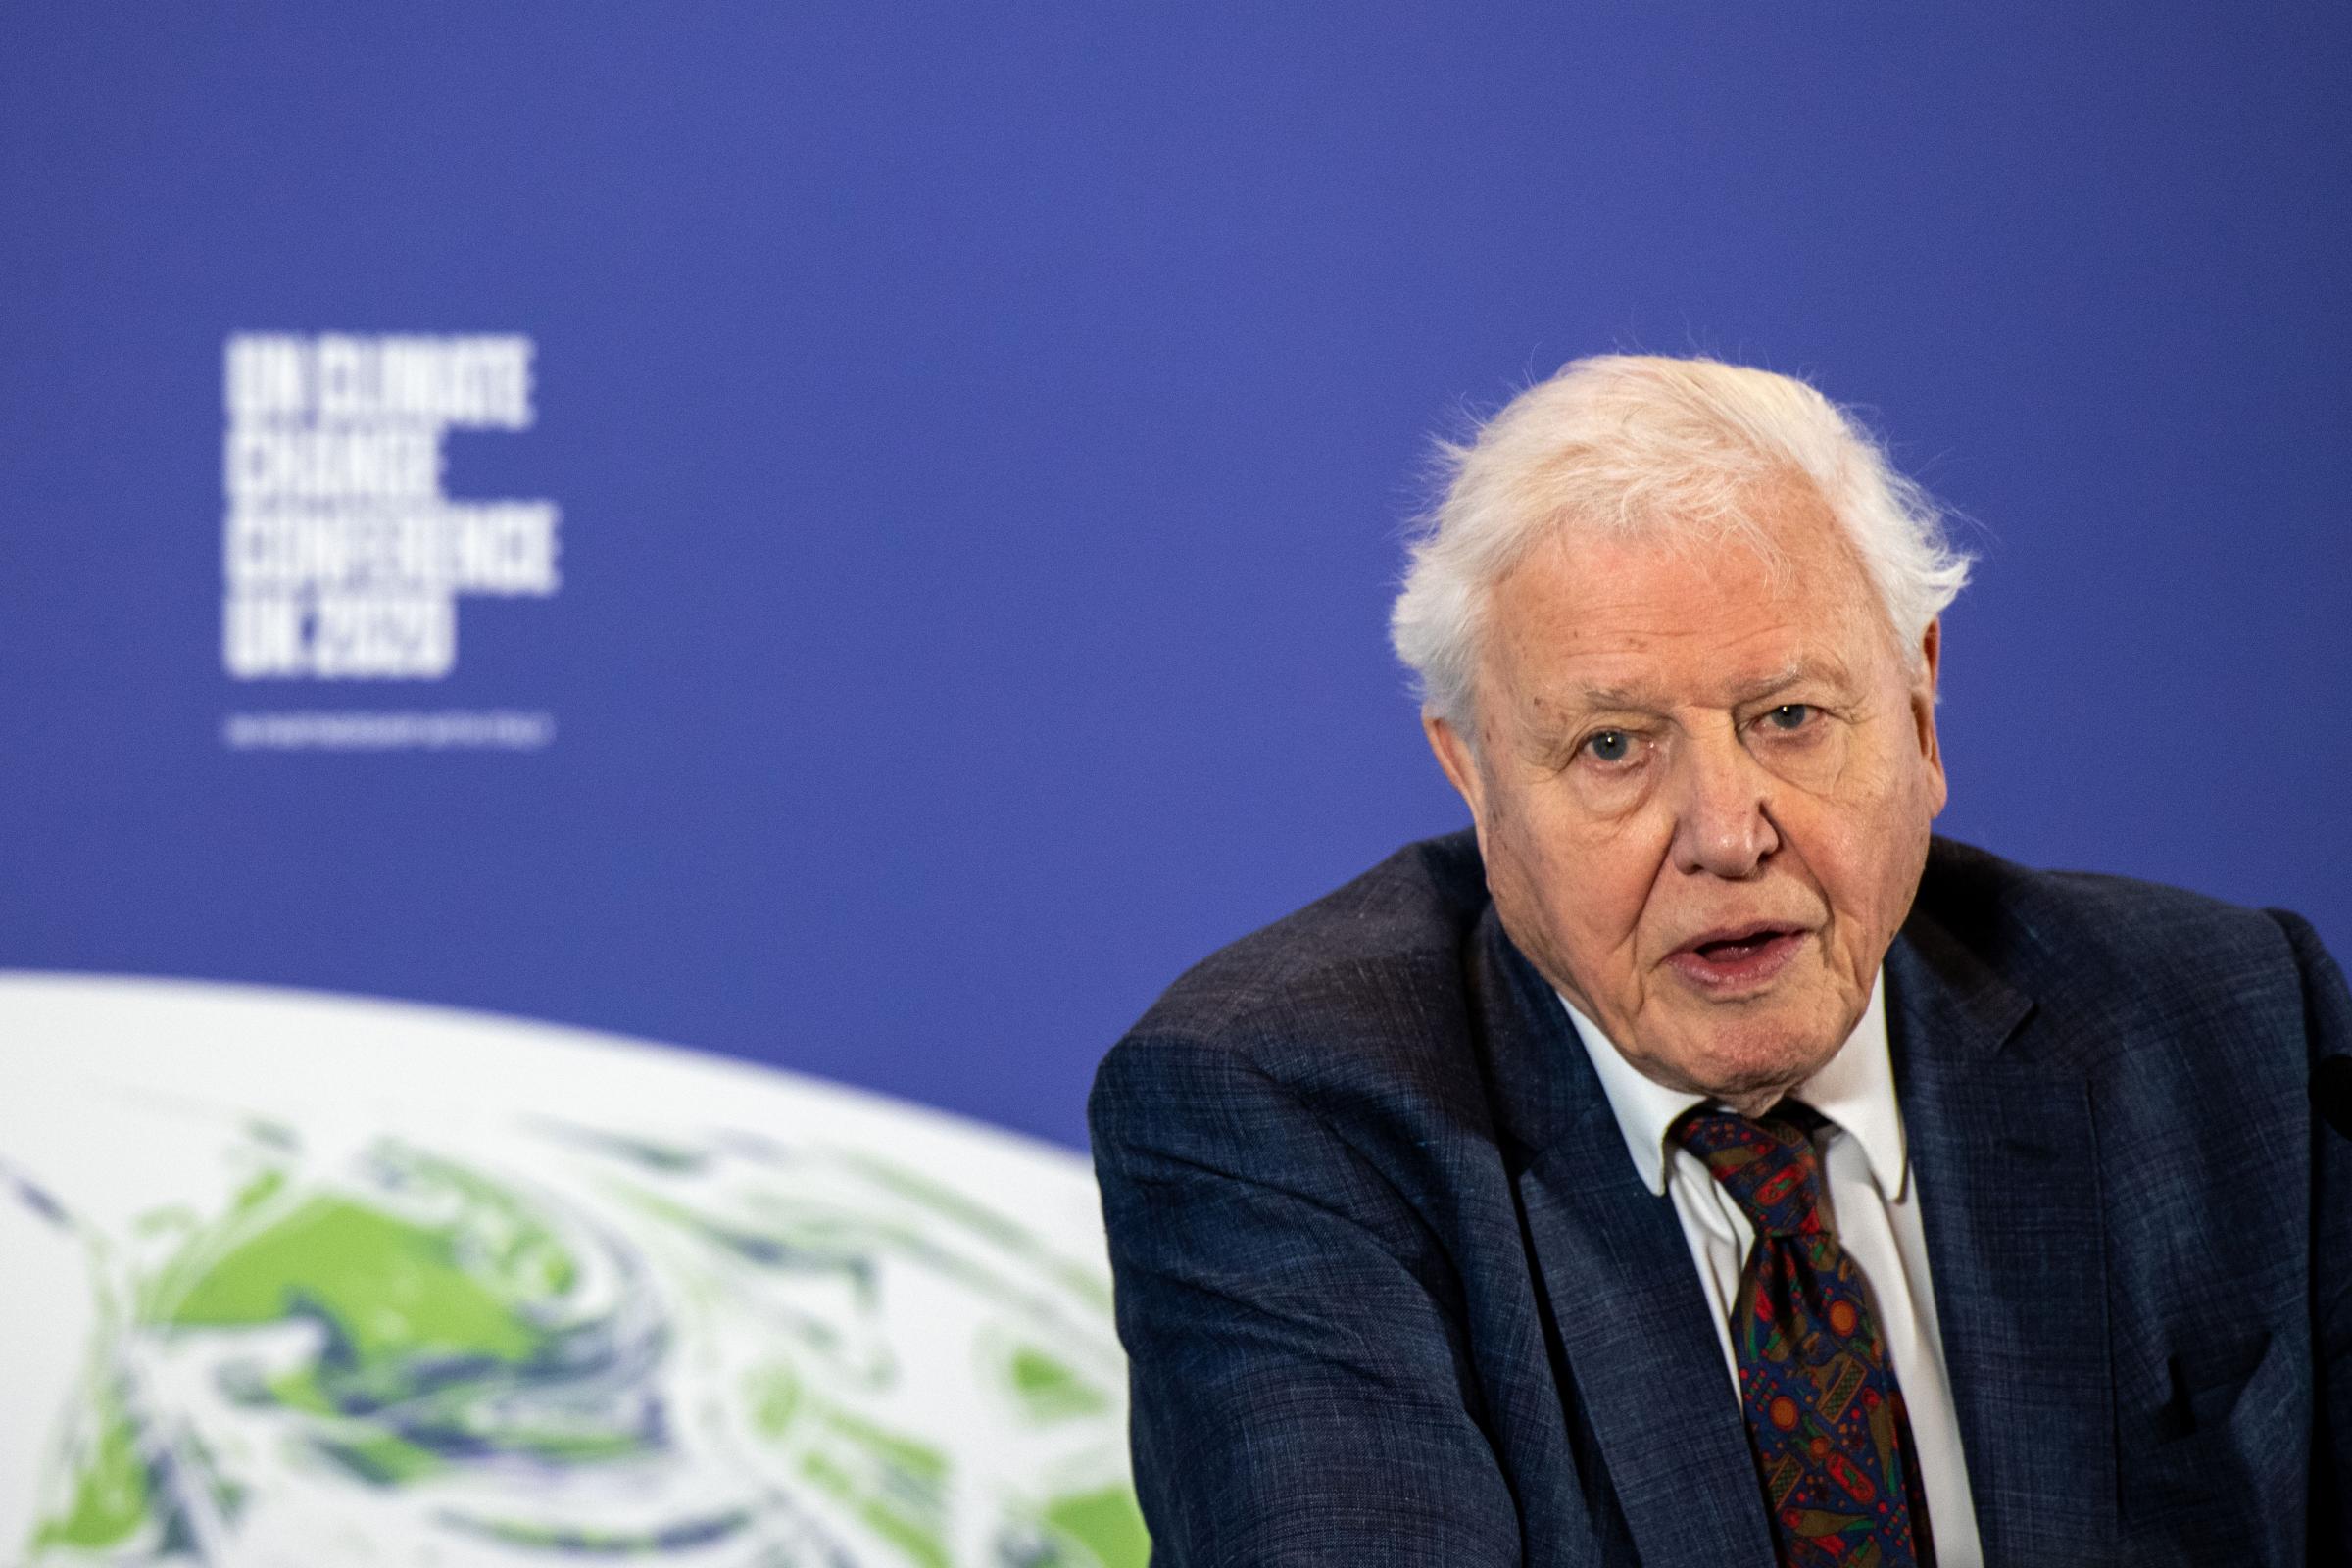 David Attenborough Delivering A Speech At COP26 Climate Summit